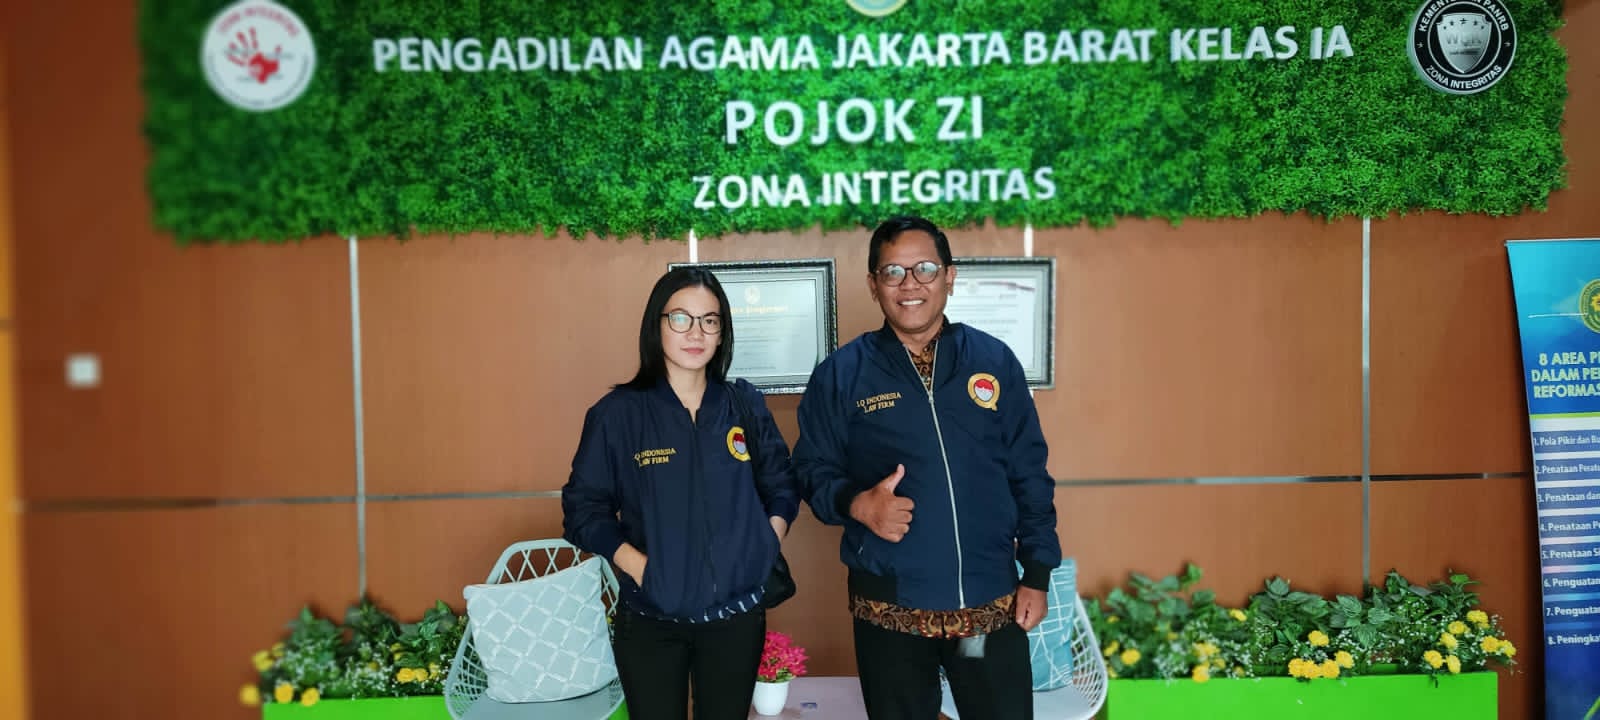 Tolak Klaim Nasabah, Perusahaan Asuransi PT PANIN DAI-ICHI LIFE Digugat di Pengadilan Agama Jakarta Barat